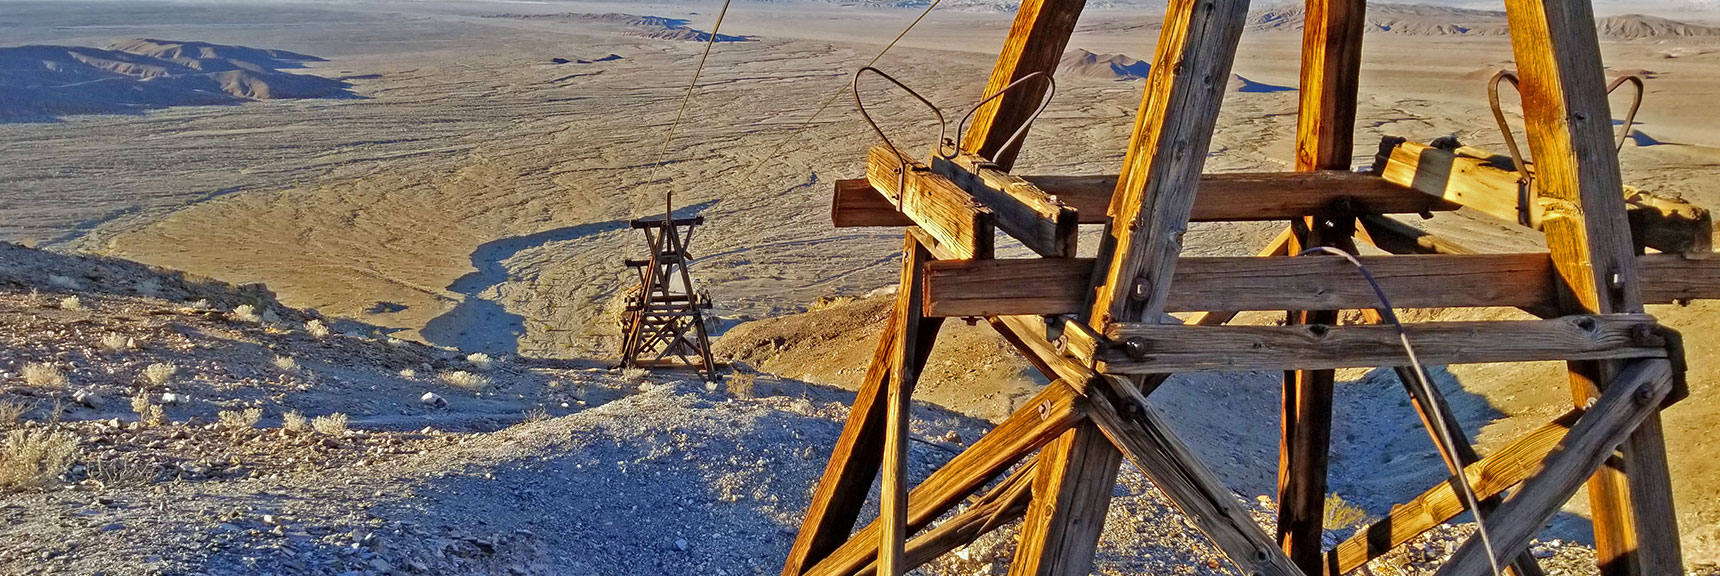 View Down the Aerial Tram Way | Keane Wonder Mine | Death Valley National Park, California